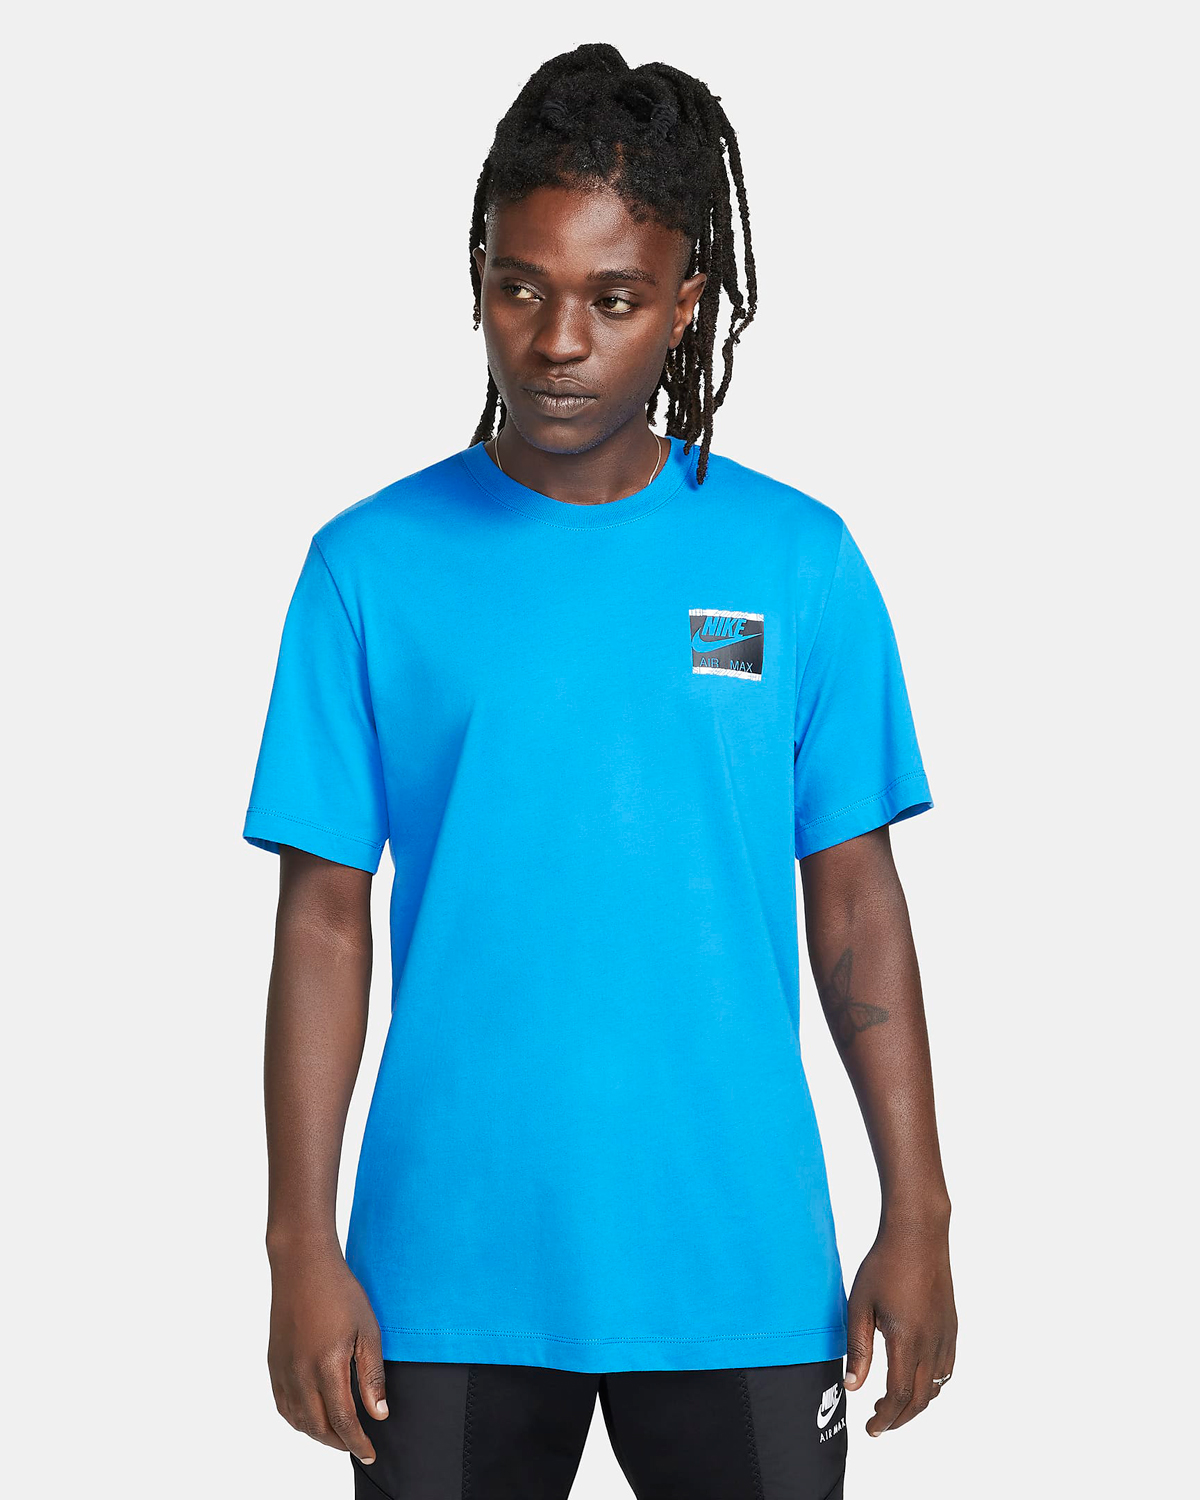 Nike-Sportswear-Tee-Shirt-Photo-Blue-1